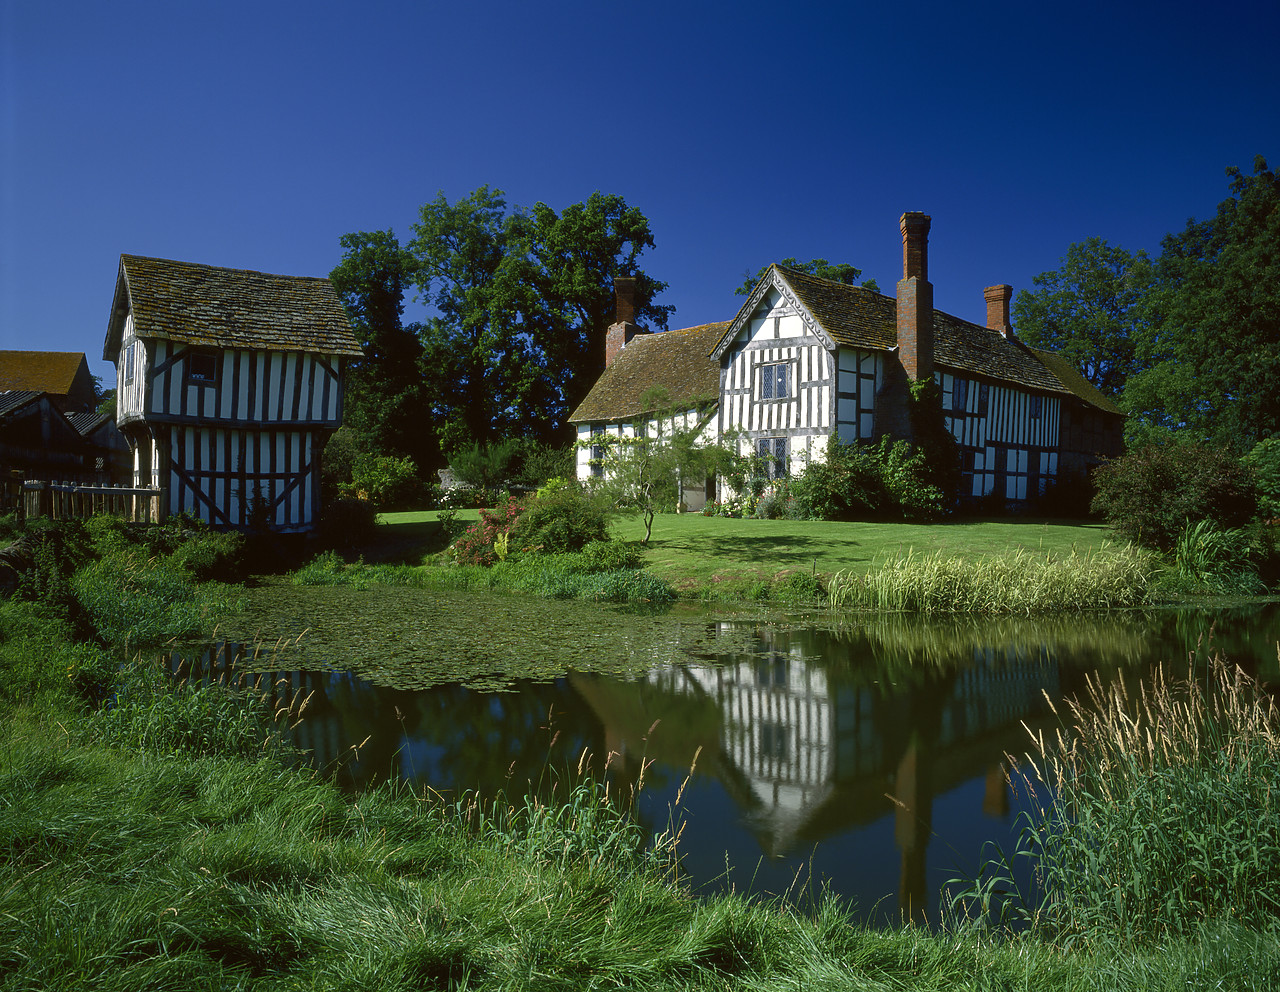 #881507-2 - Timbered Manor House, Lower Brockhampton, Herefordshire, England